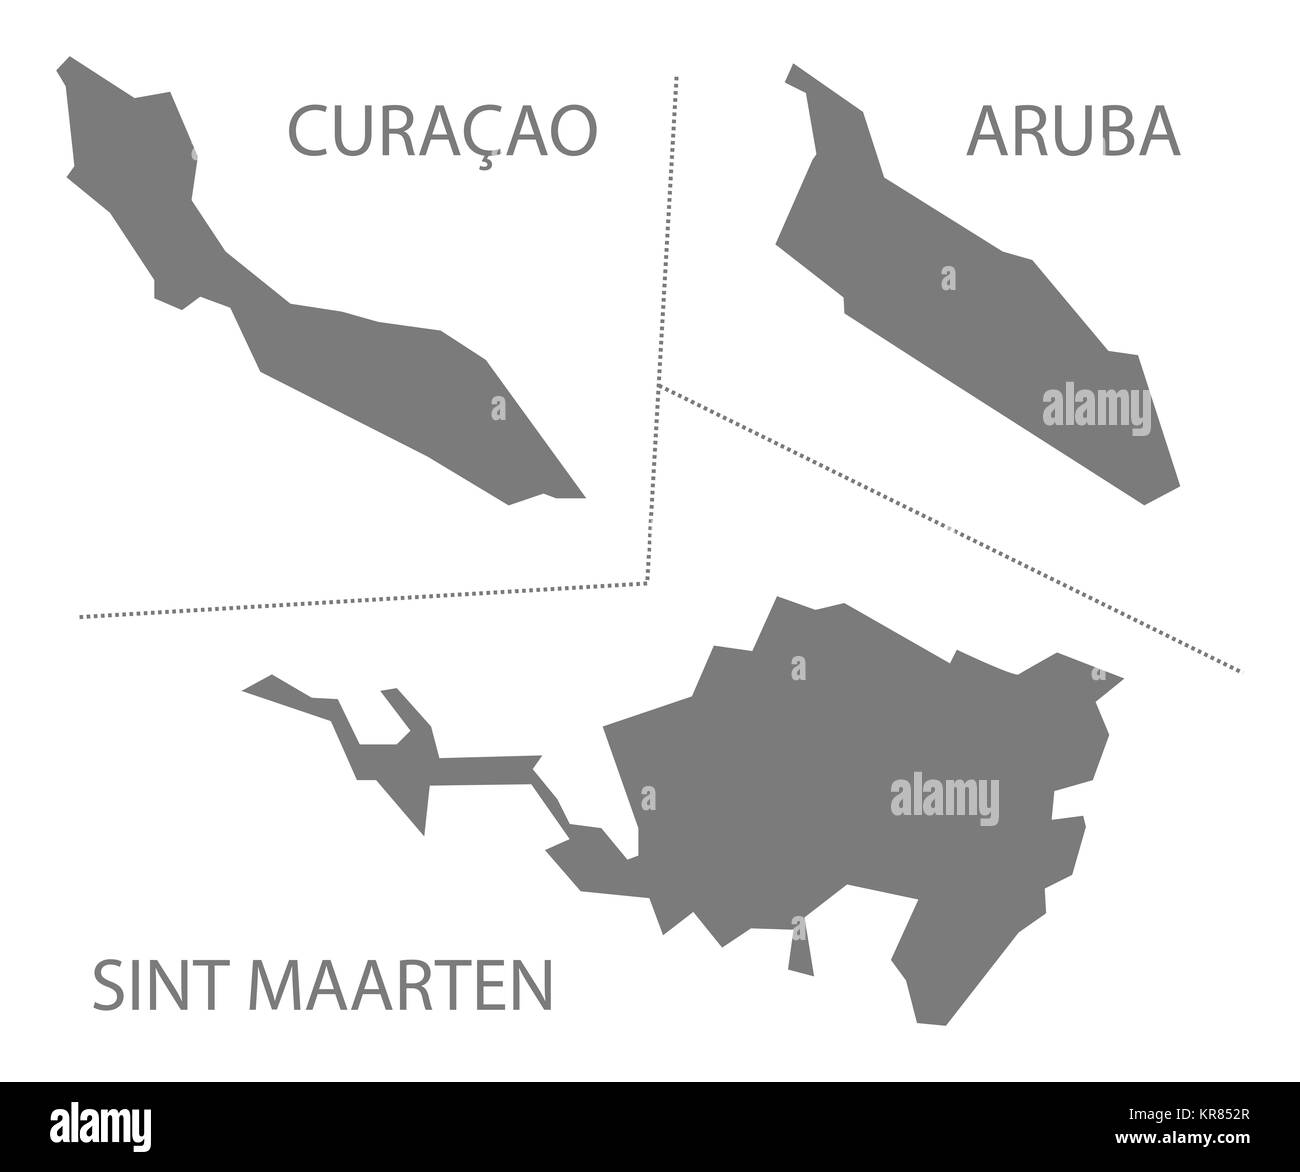 Curacao - Aruba - Sint Maarten Isole Paesi Bassi Mappa grigio Foto Stock